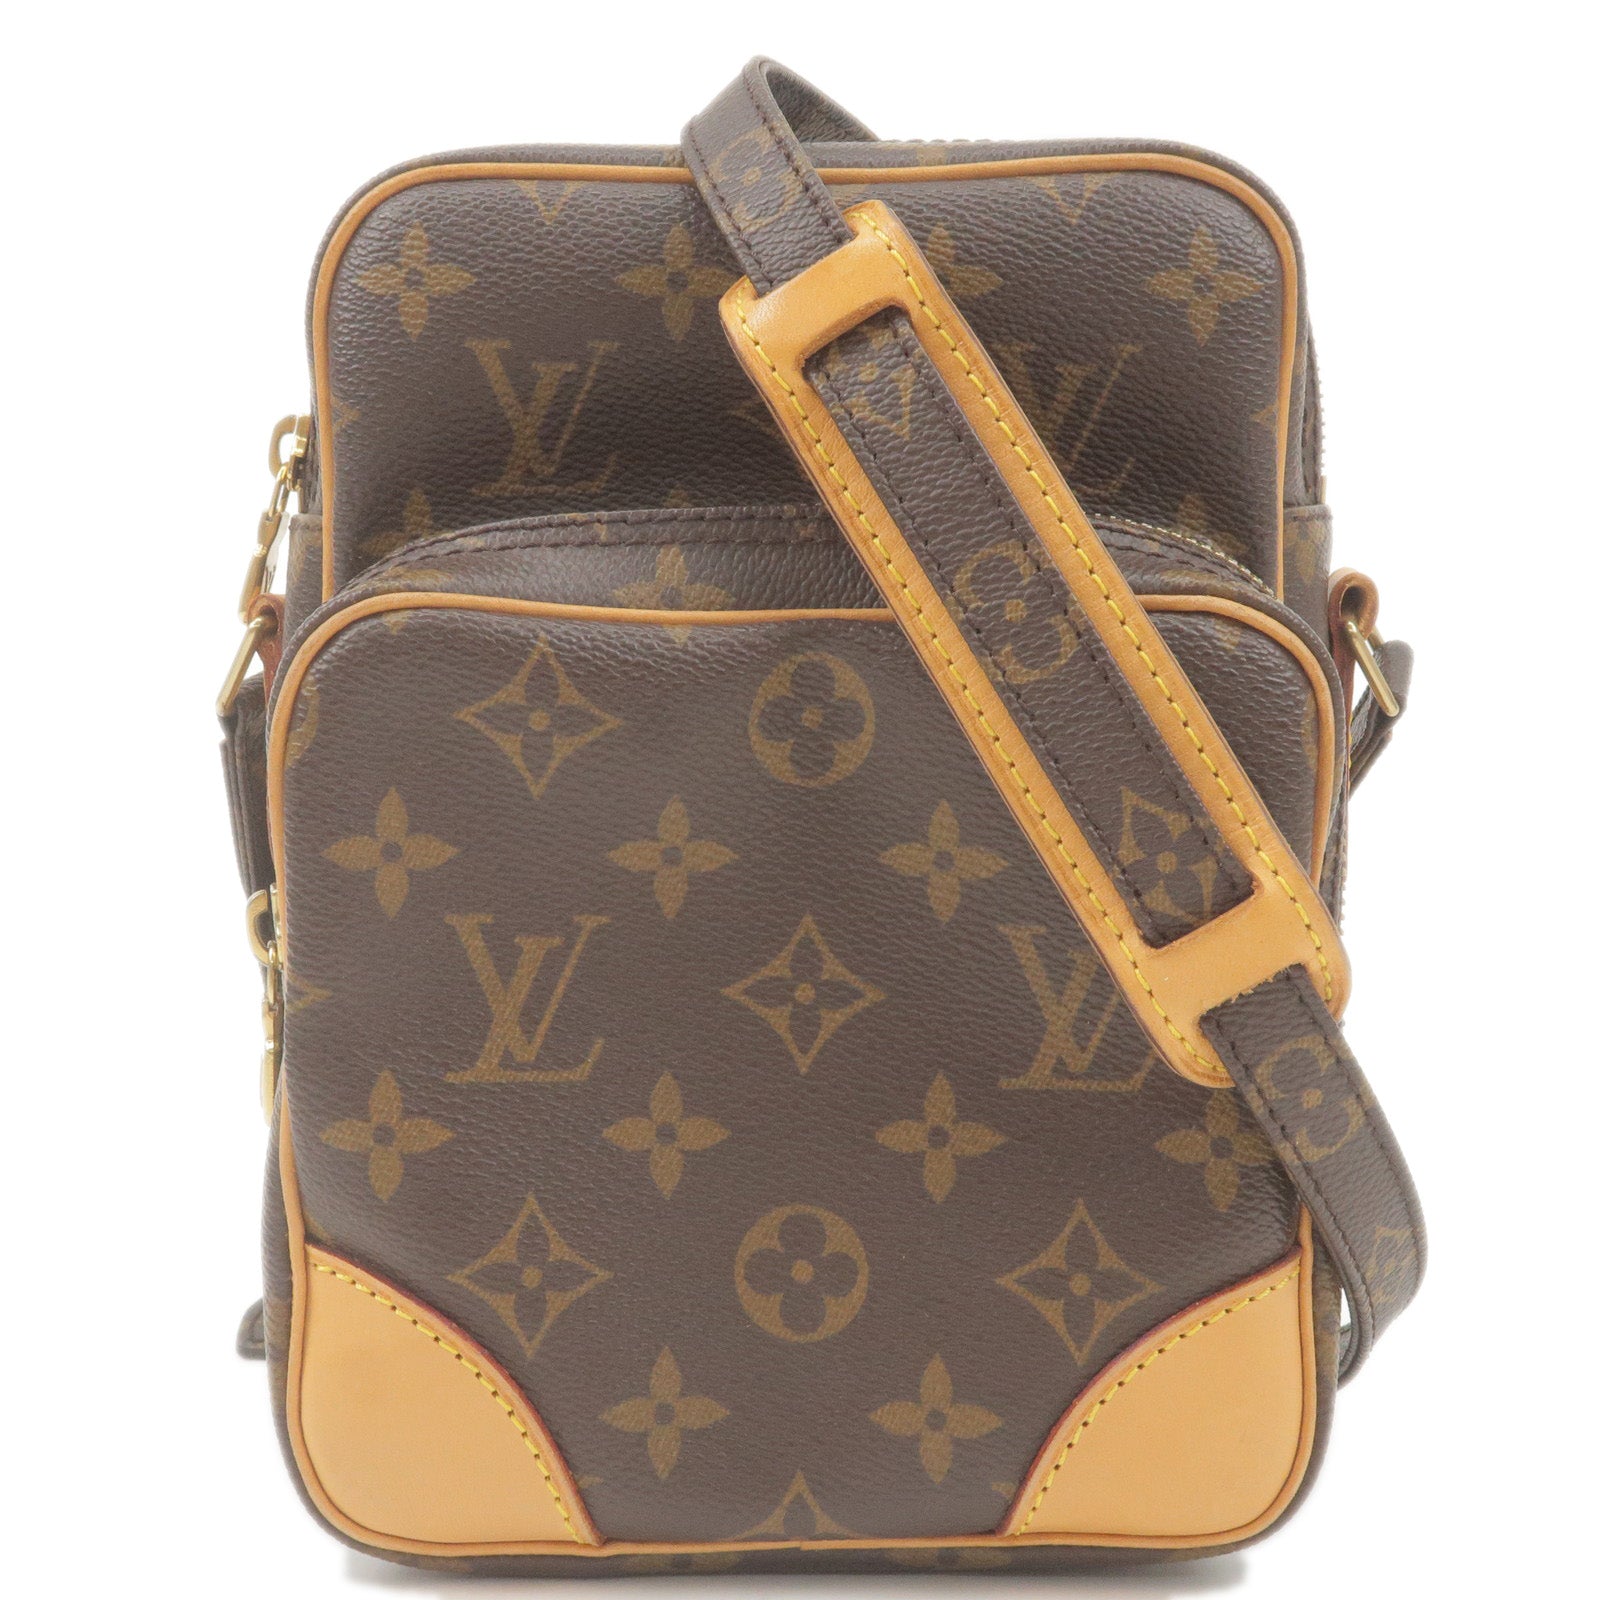 LOUIS VUITTON  Used Shoulder Bag Monogram Brown M45236